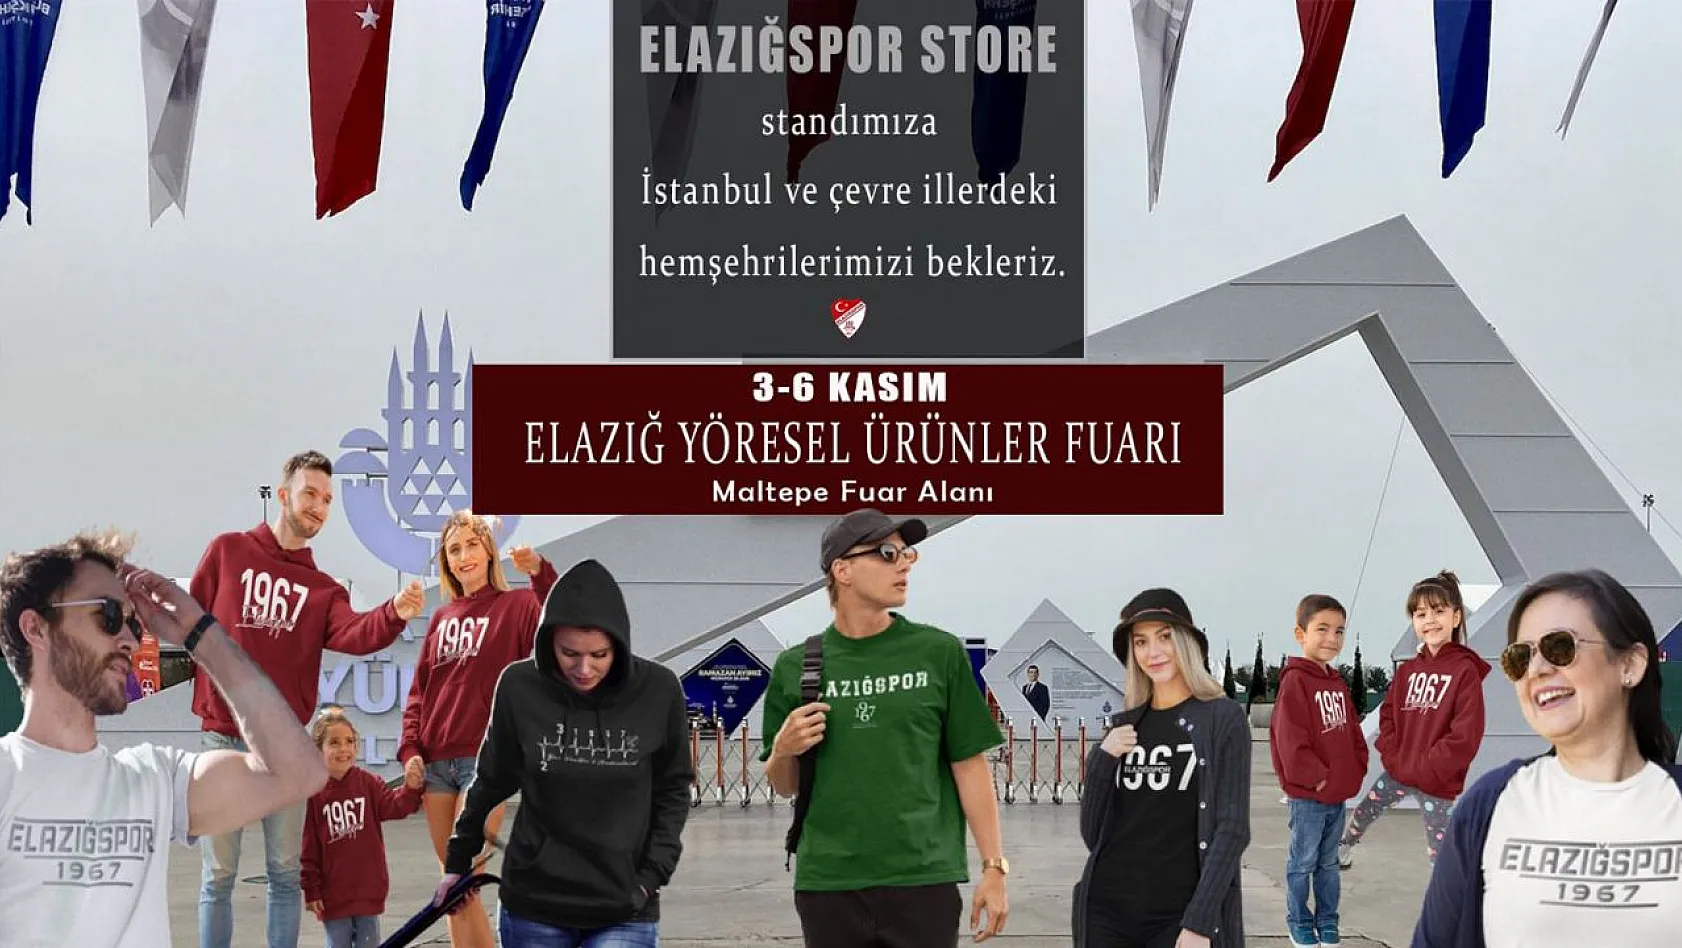 Elazığspor Store, İstanbul'da